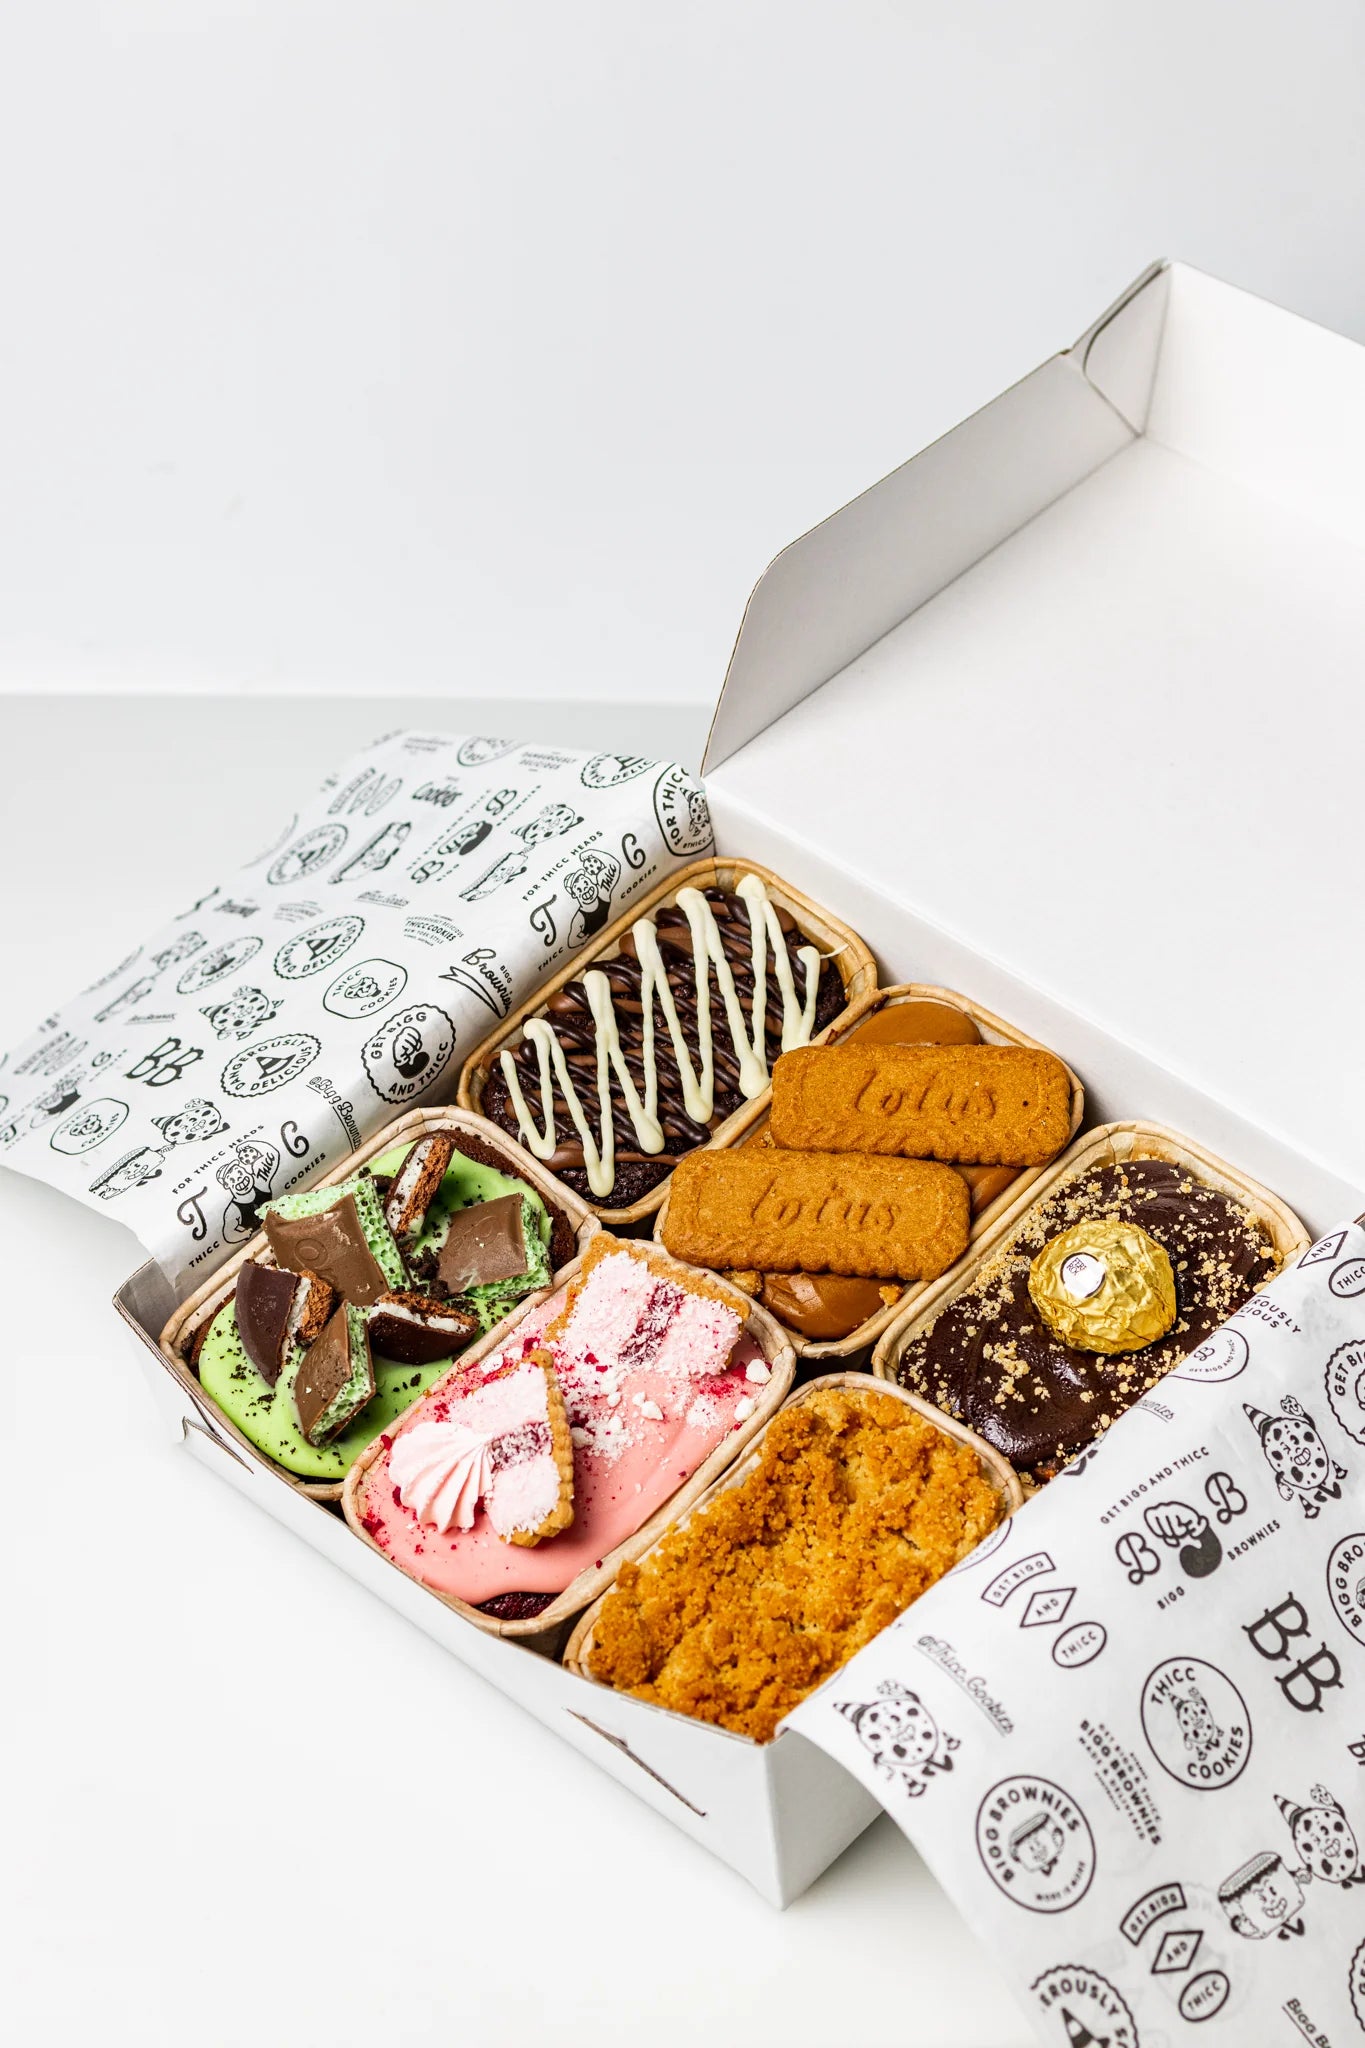 "SAVE ME SOME COOKIES" Box- BIGG Brownies & THICC Cookies - New York Style Cookies